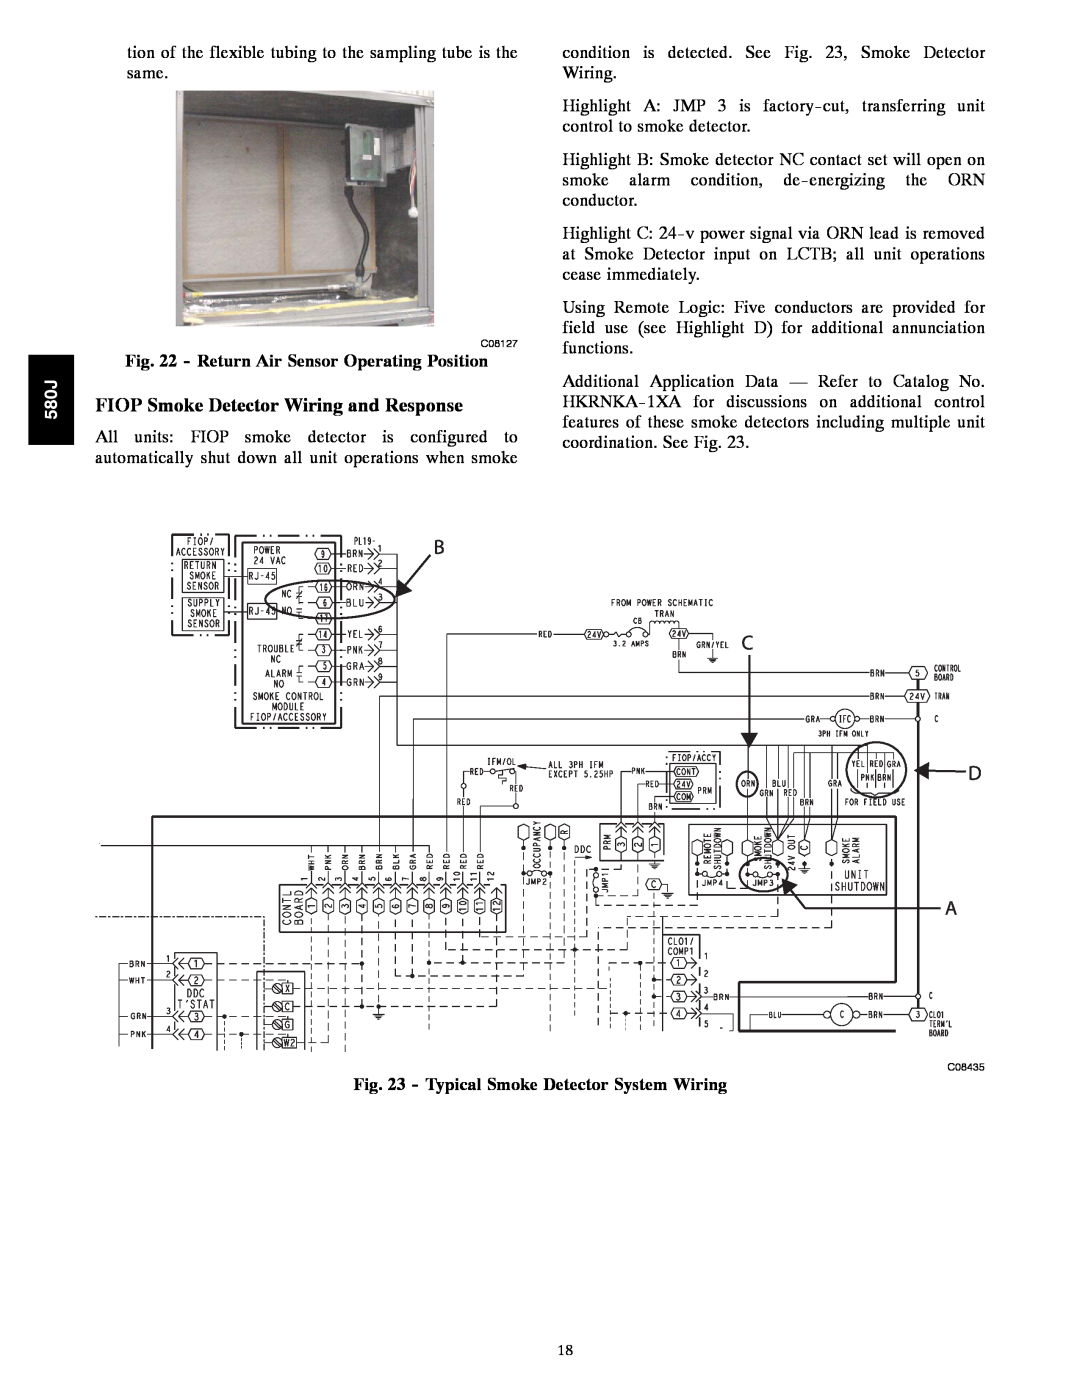 Bryant 580J*04--12 appendix FIOP Smoke Detector Wiring and Response, Return Air Sensor Operating Position, B C D A 